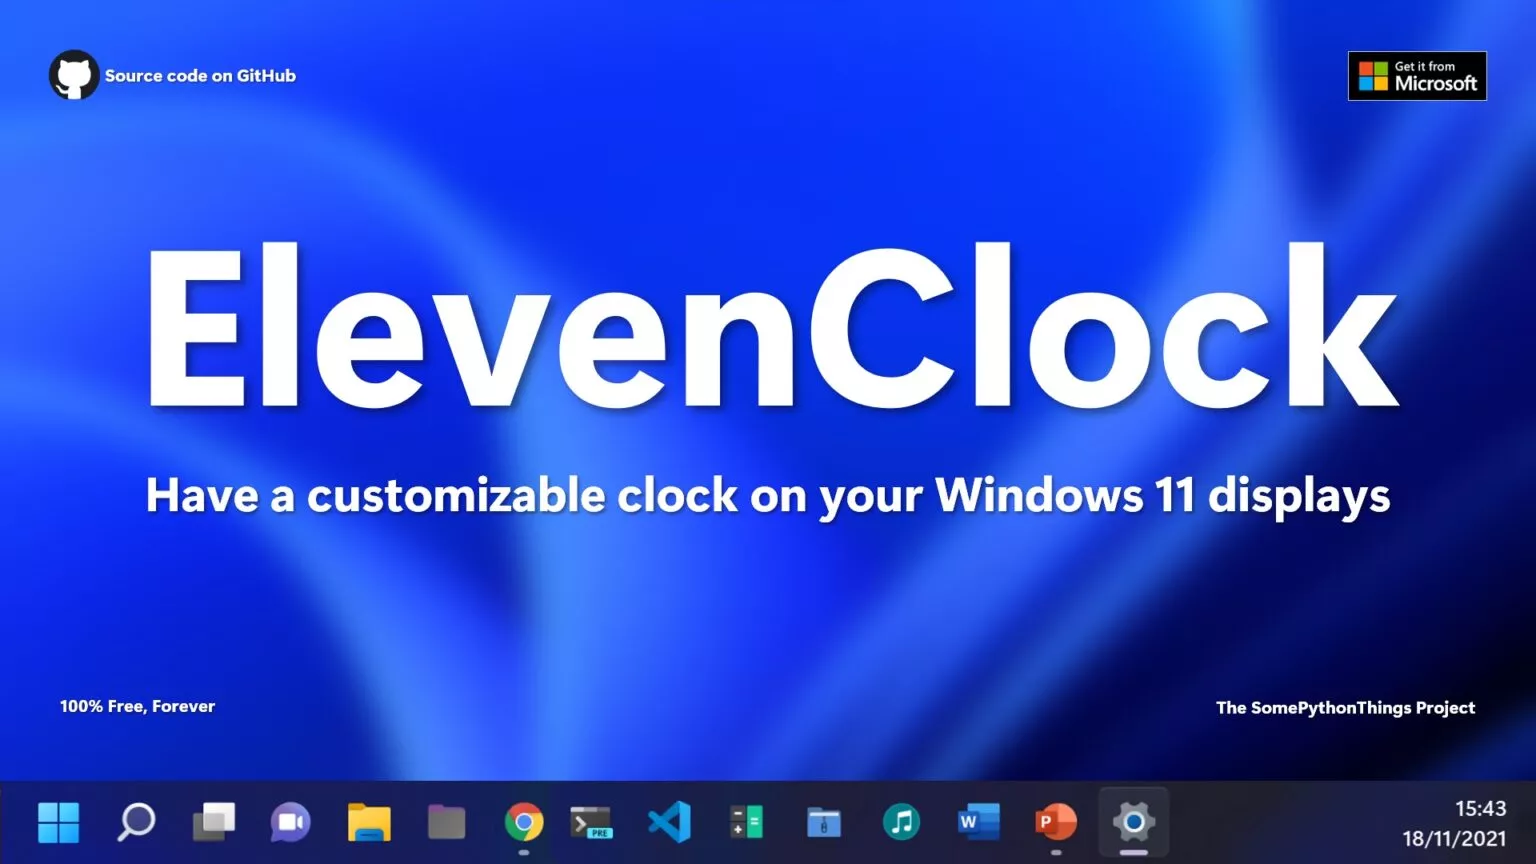 download the last version for windows ElevenClock 4.3.2